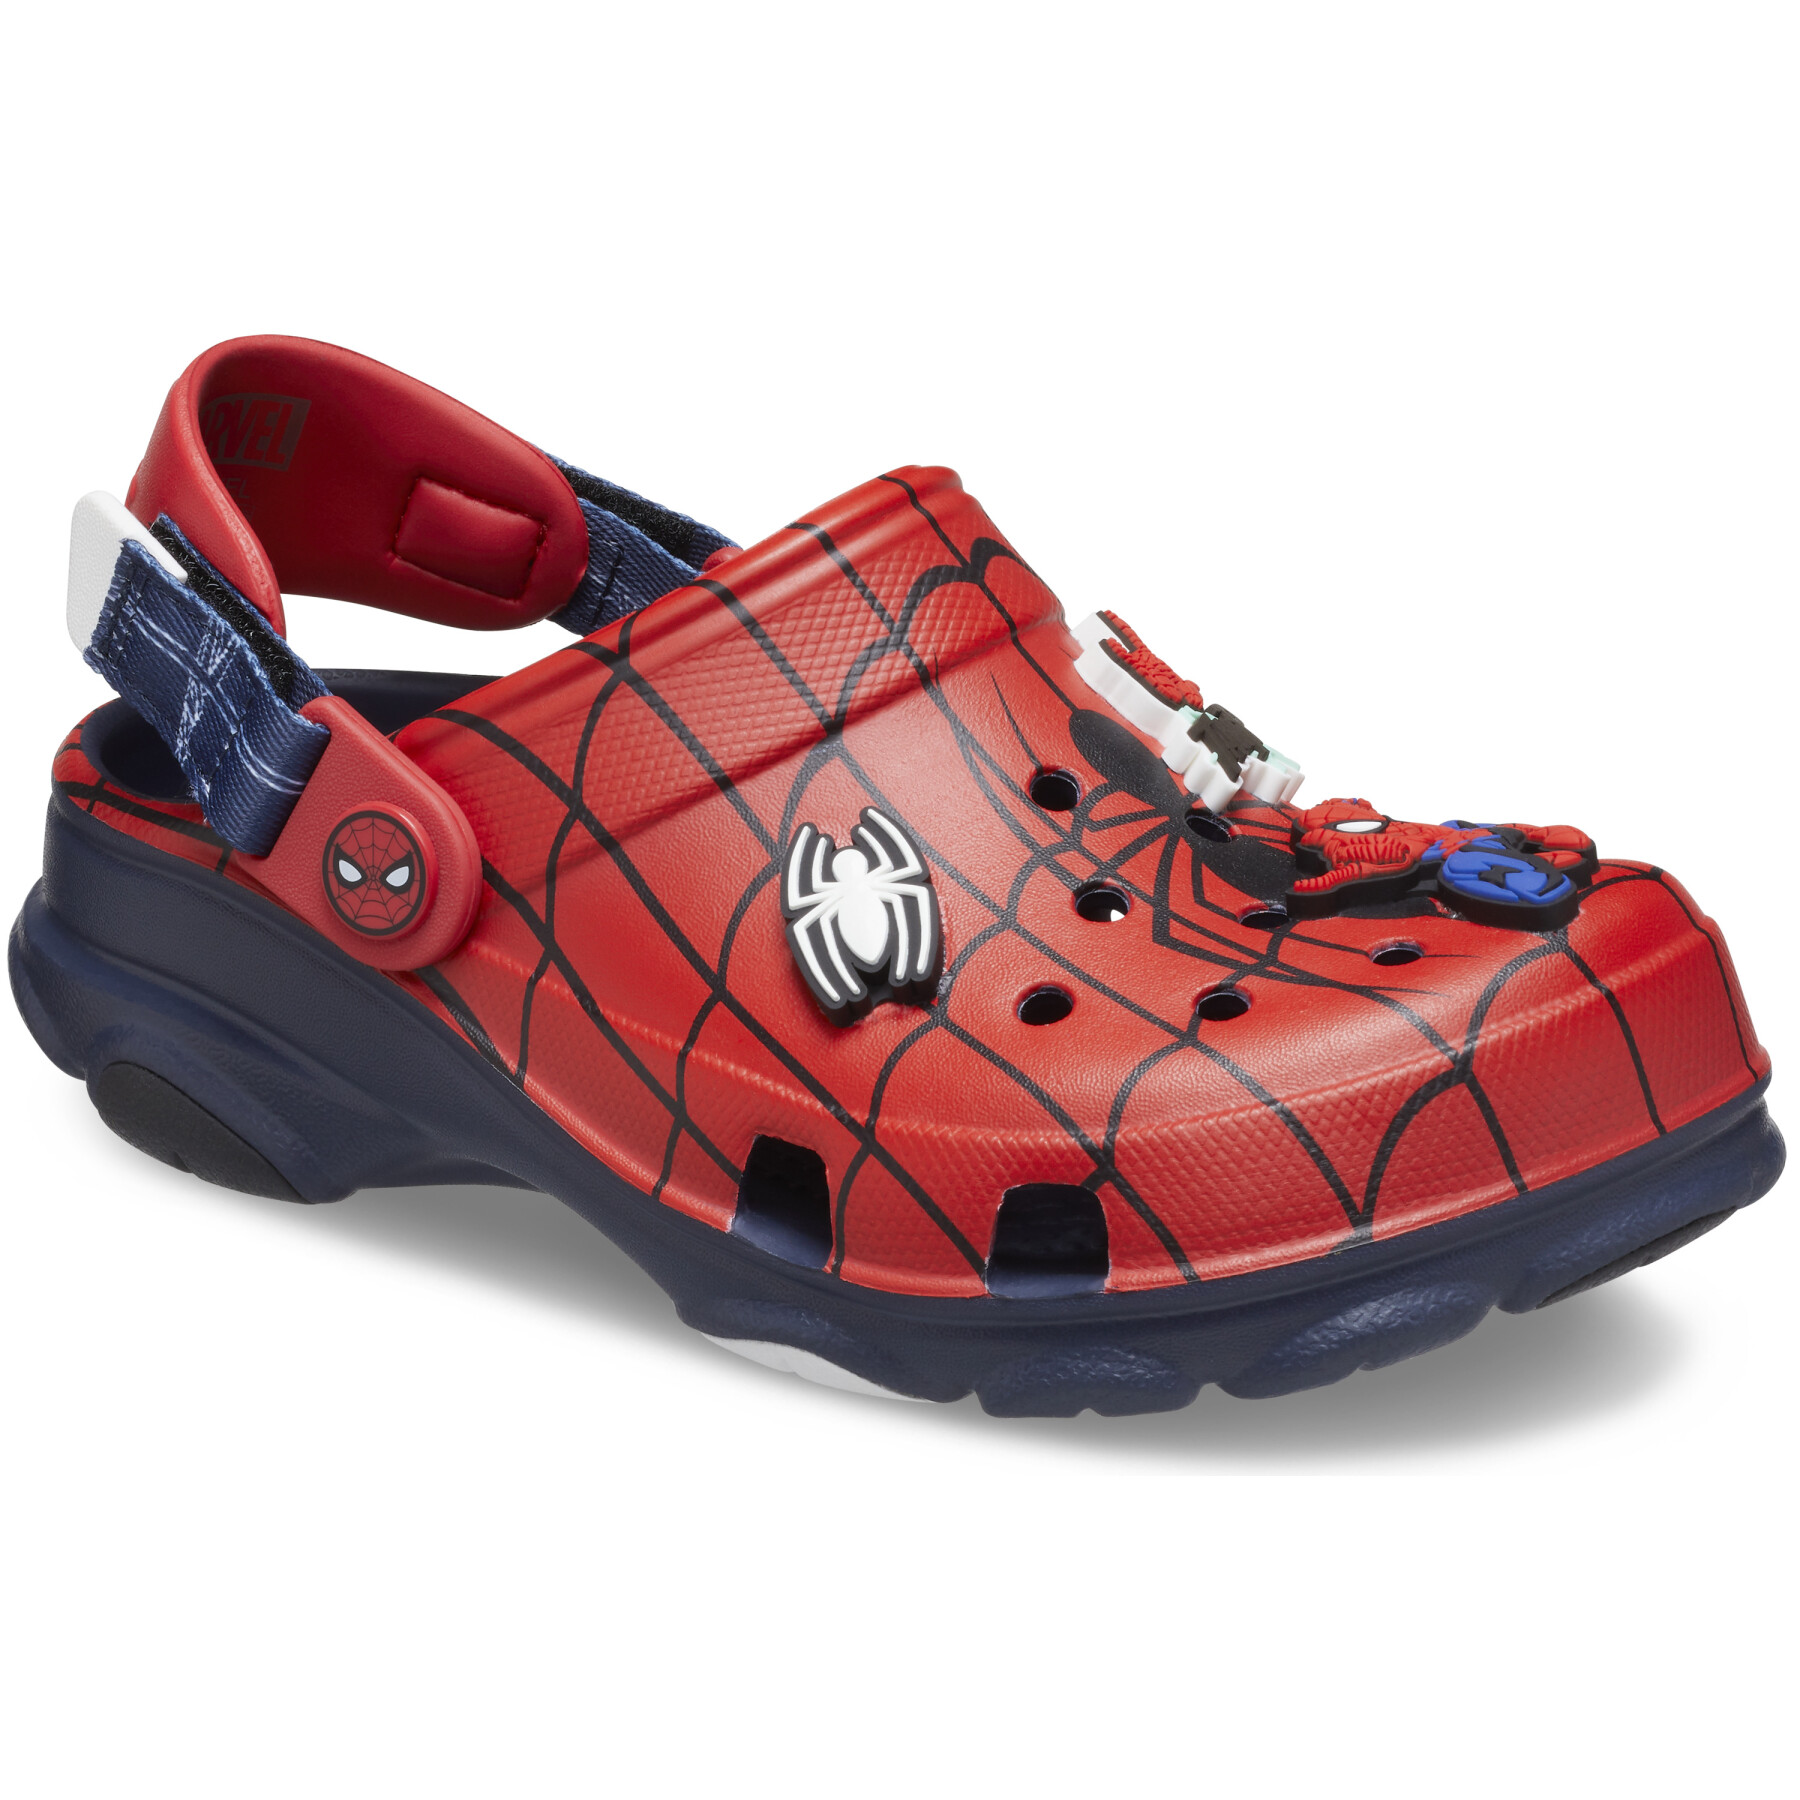 Children's clogs Crocs Spider-Man All-Terrain